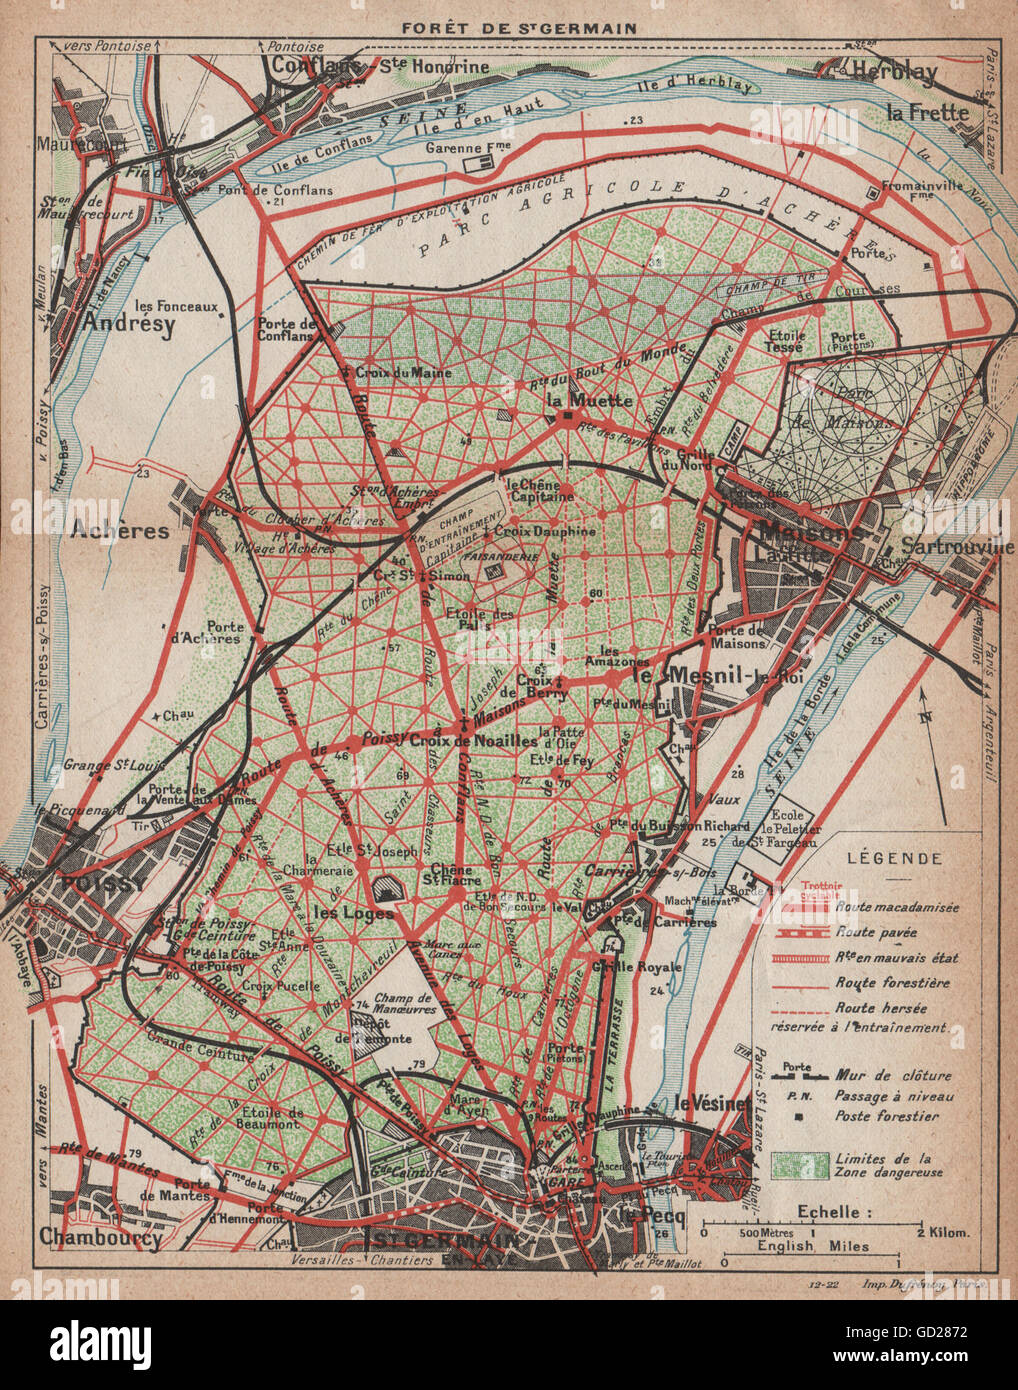 FORÊT DE ST. GERMAIN-EN-LAYE. Vintage map. Poissy Maisons-Lafitte Yvelines  1922 Stock Photo - Alamy